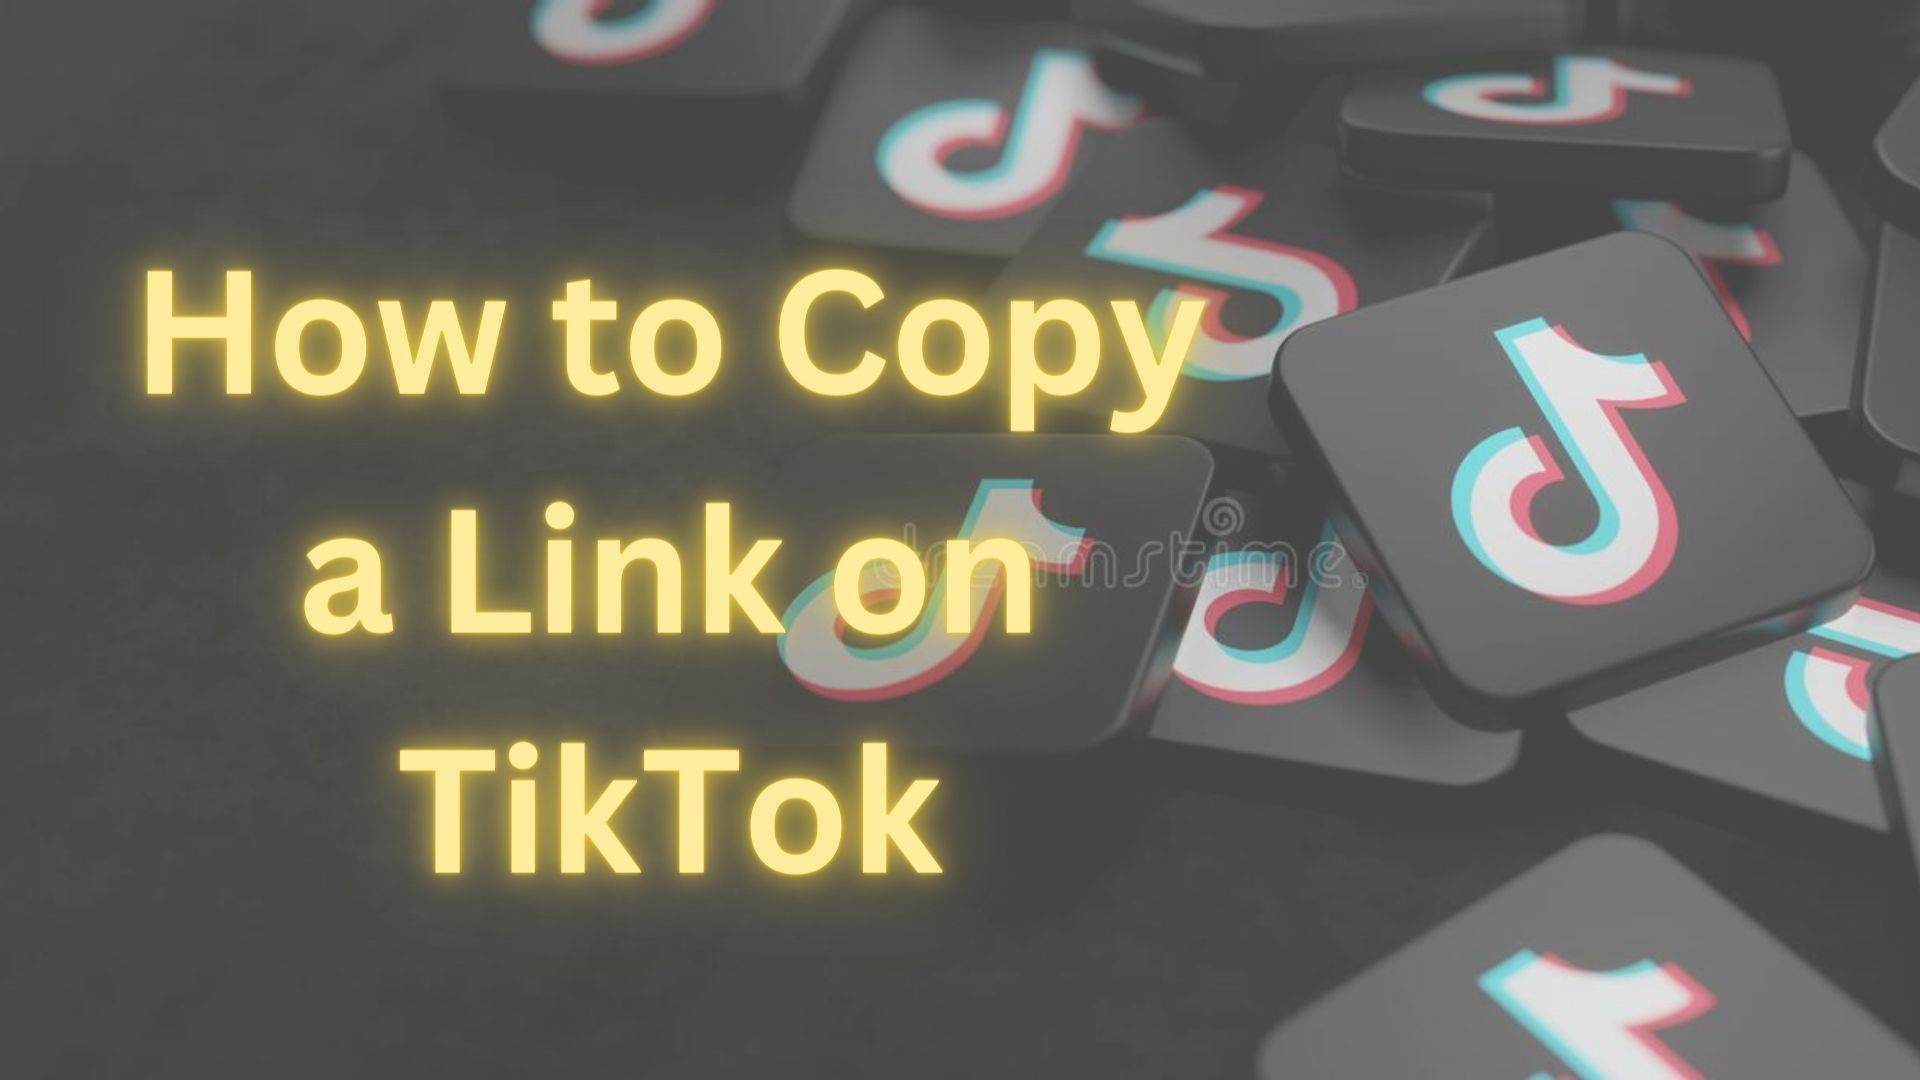 How to copy a link on TikTok